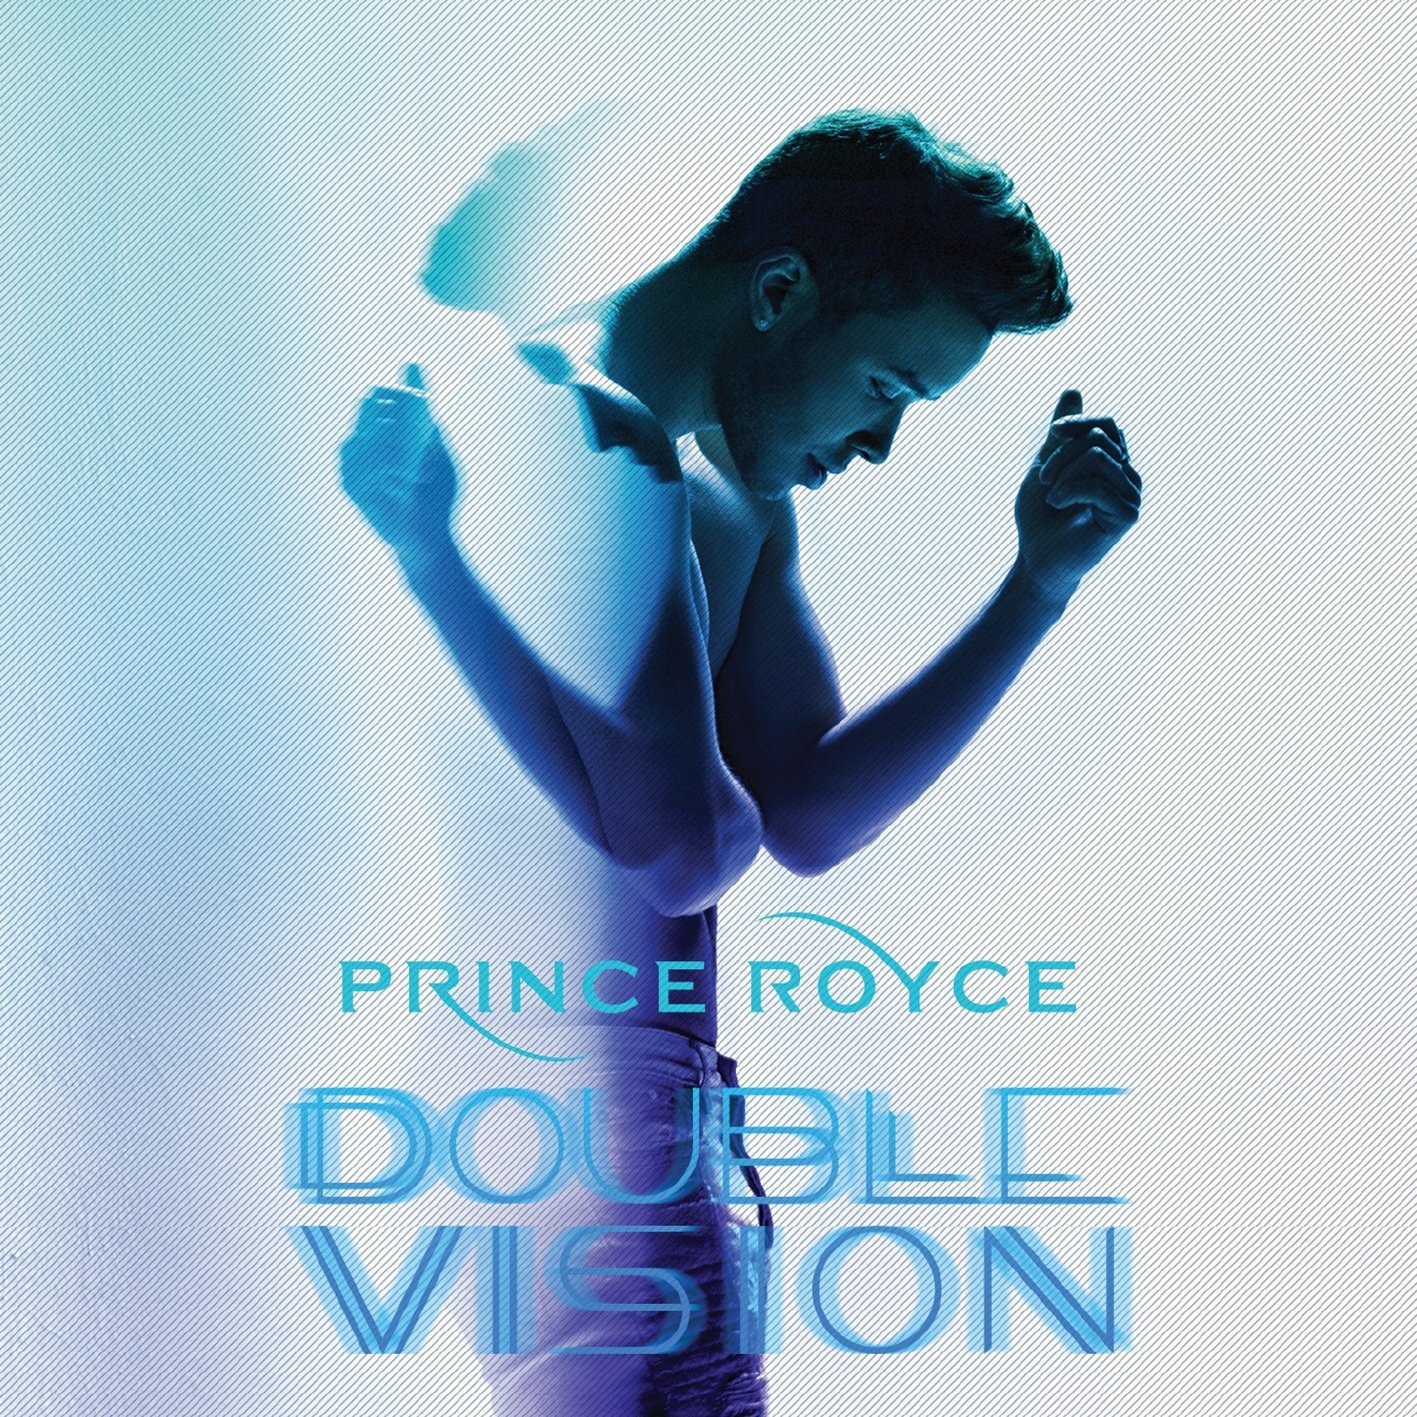 Prince Royce - Doble Vision {Deluxe Edition} (2015) [HDTracks 24bit/44,1kHz]